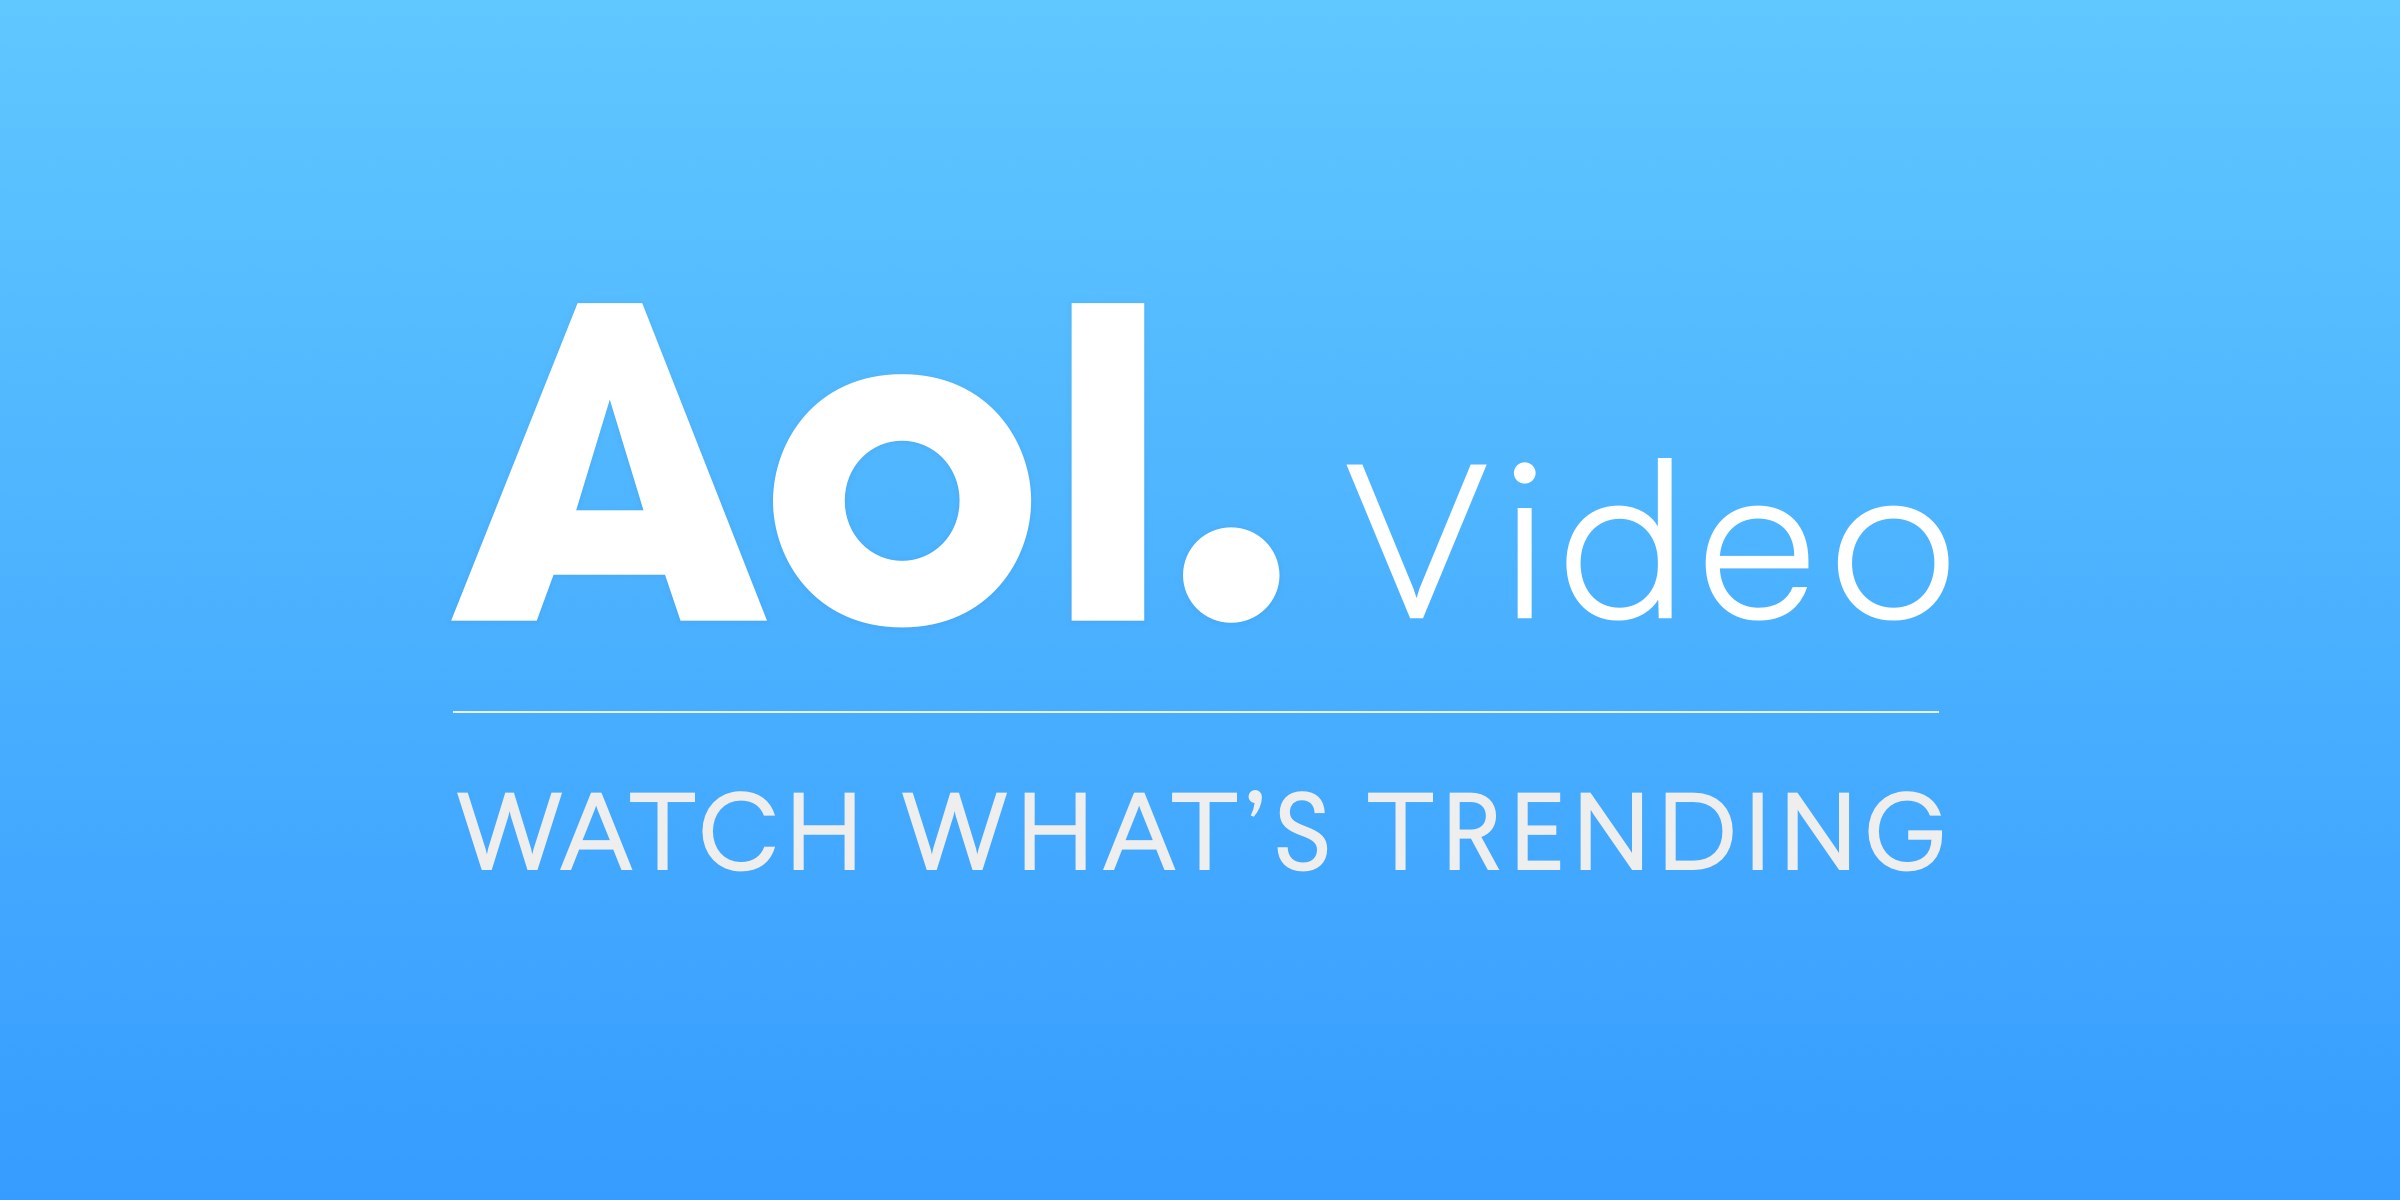 AOL Video